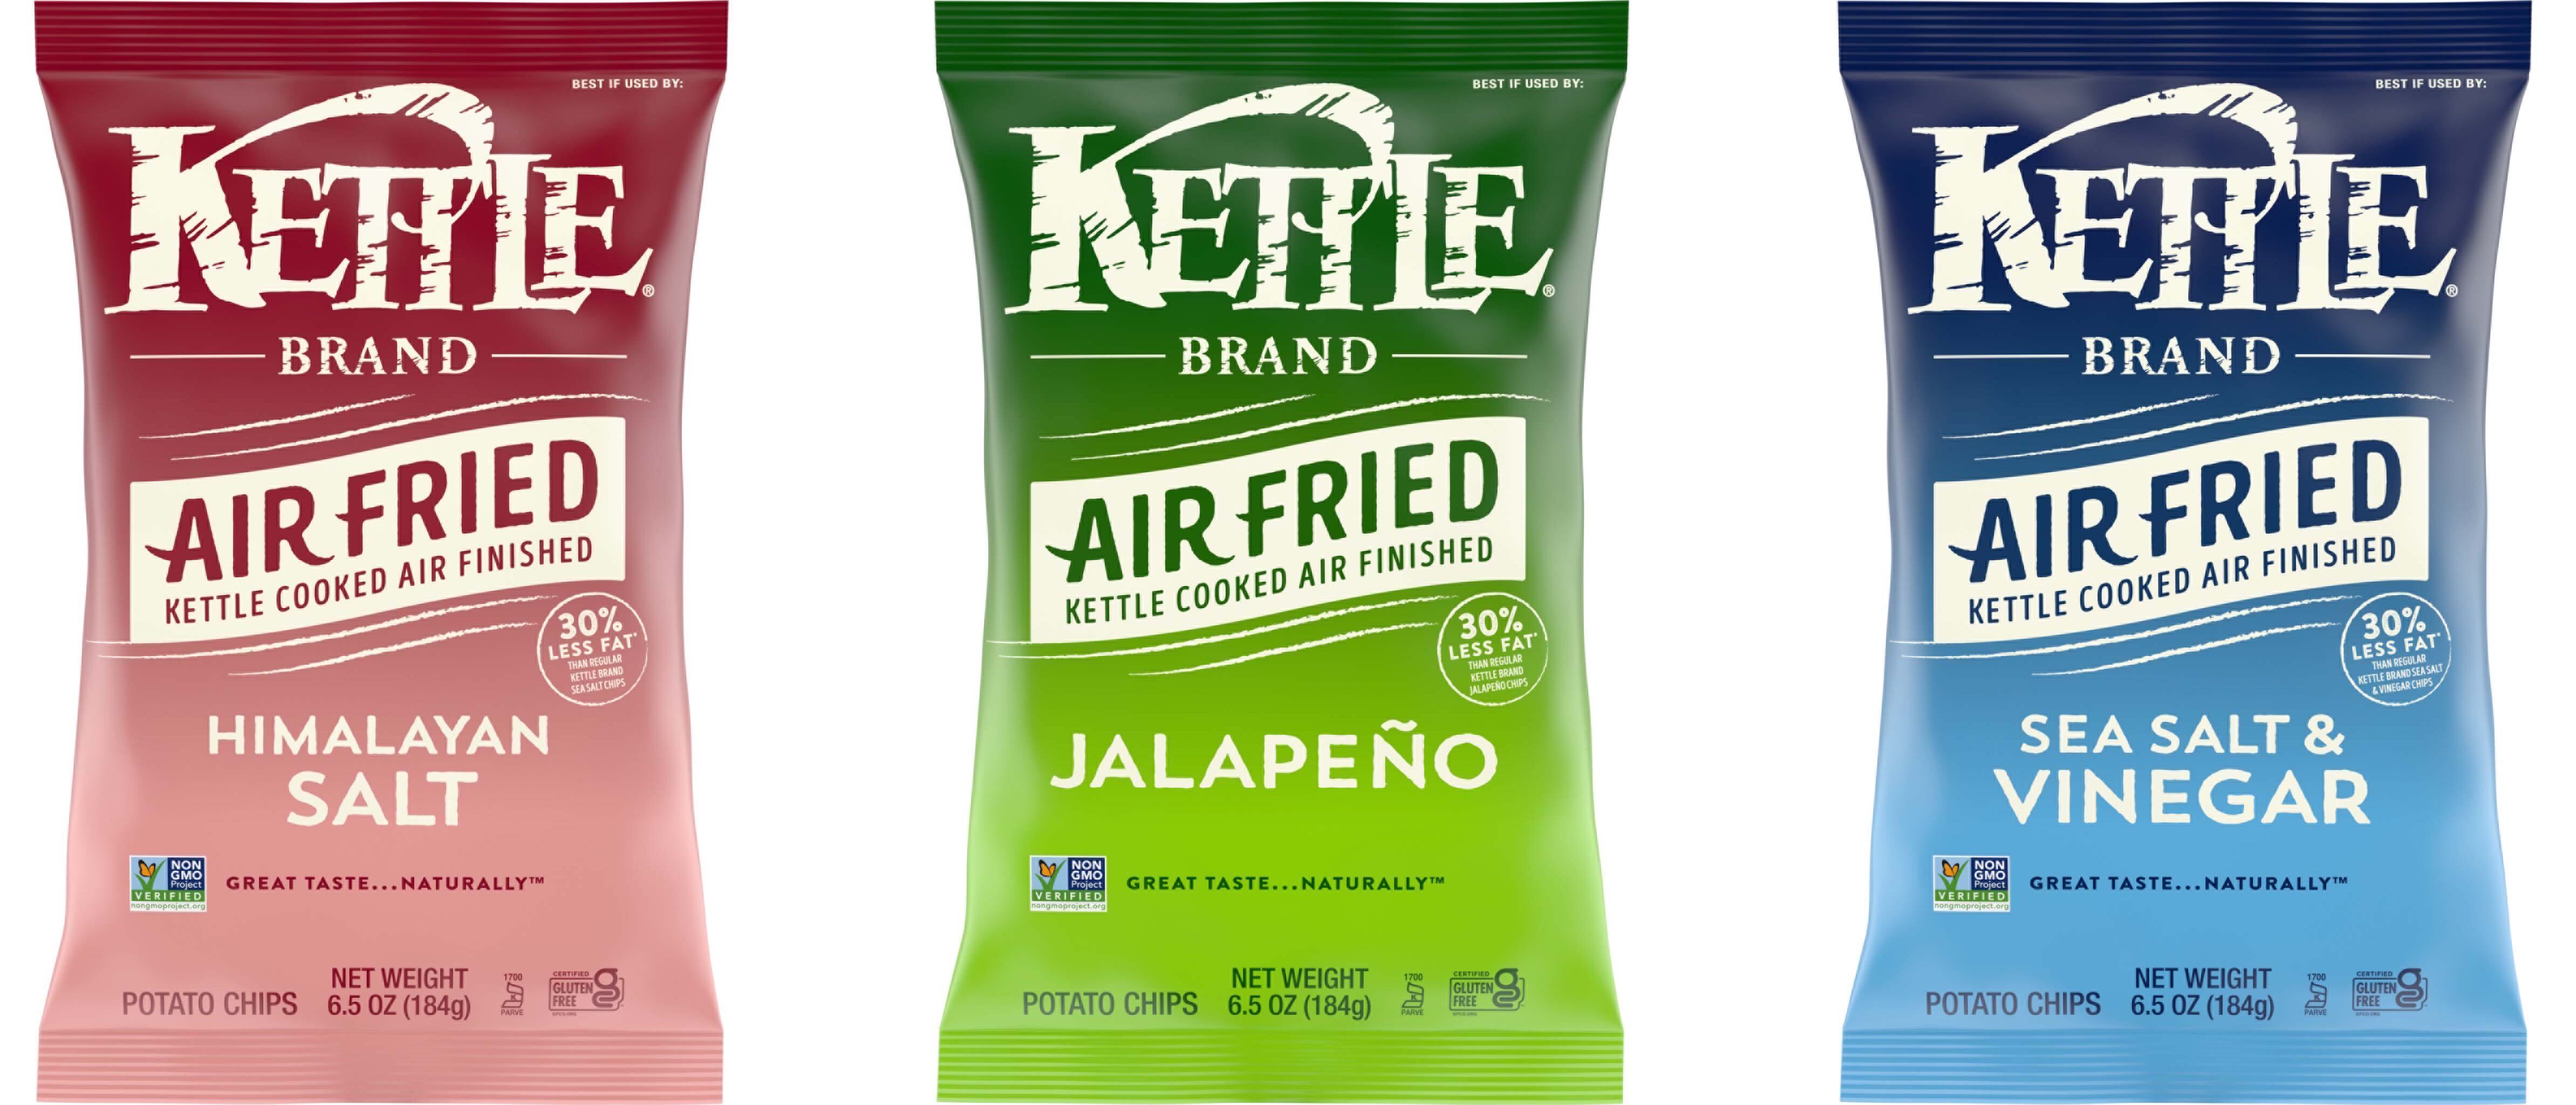 3 flavours of Kettle Brand air fried chips - himalayan salt, jalapeno, sea salt & vinegar